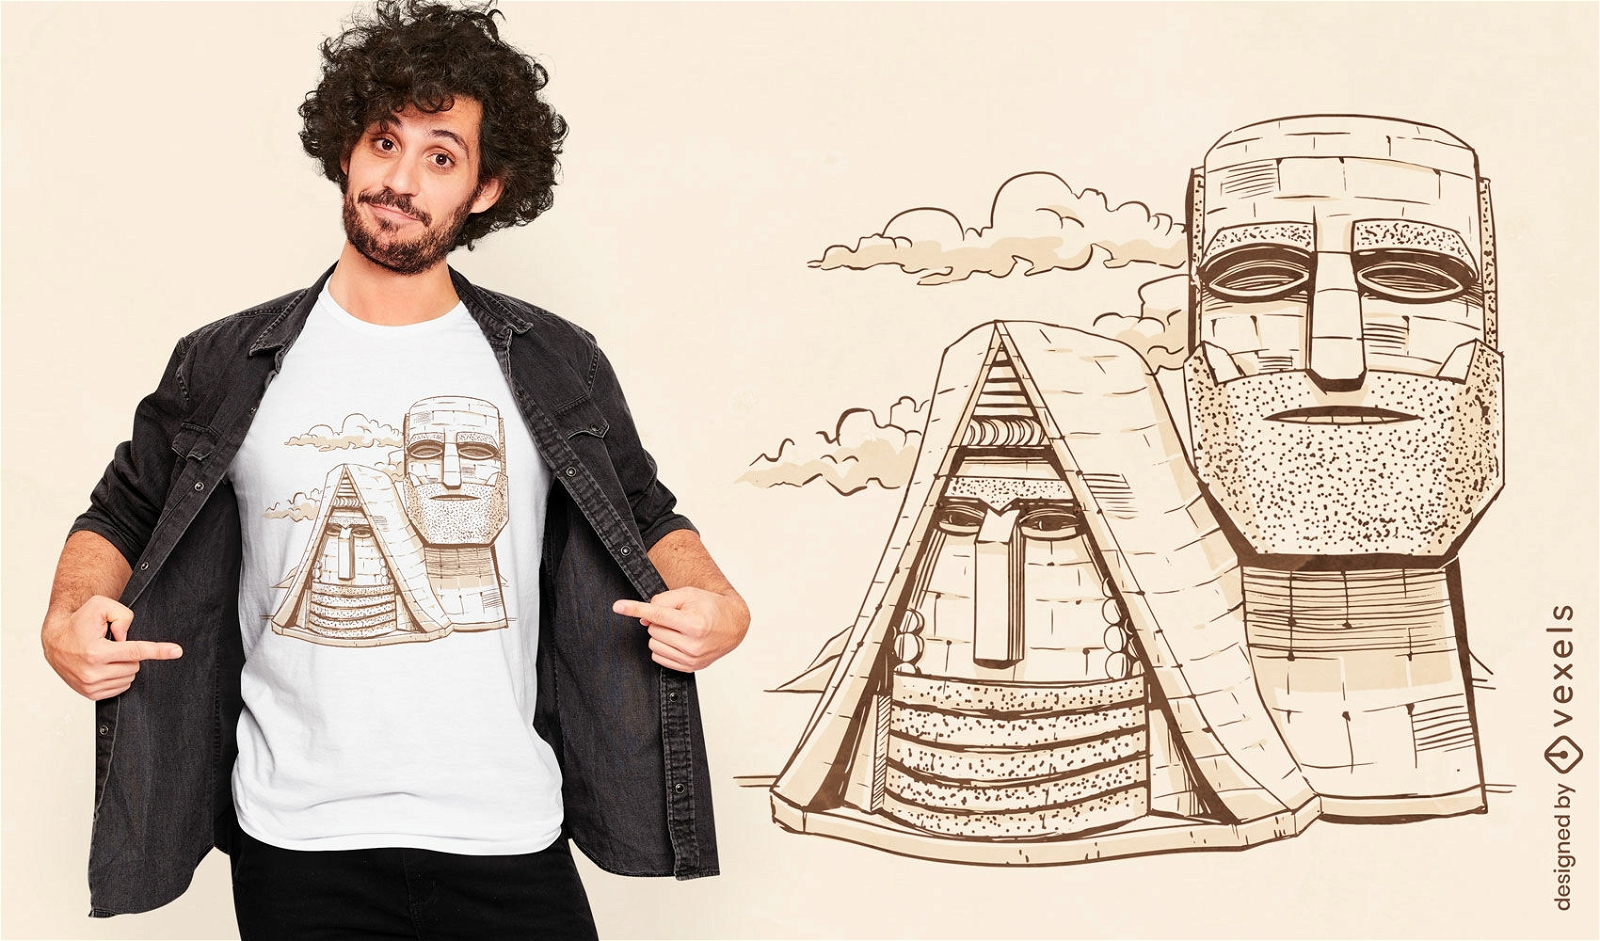 Artsakh Armenia mountain statues t-shirt design